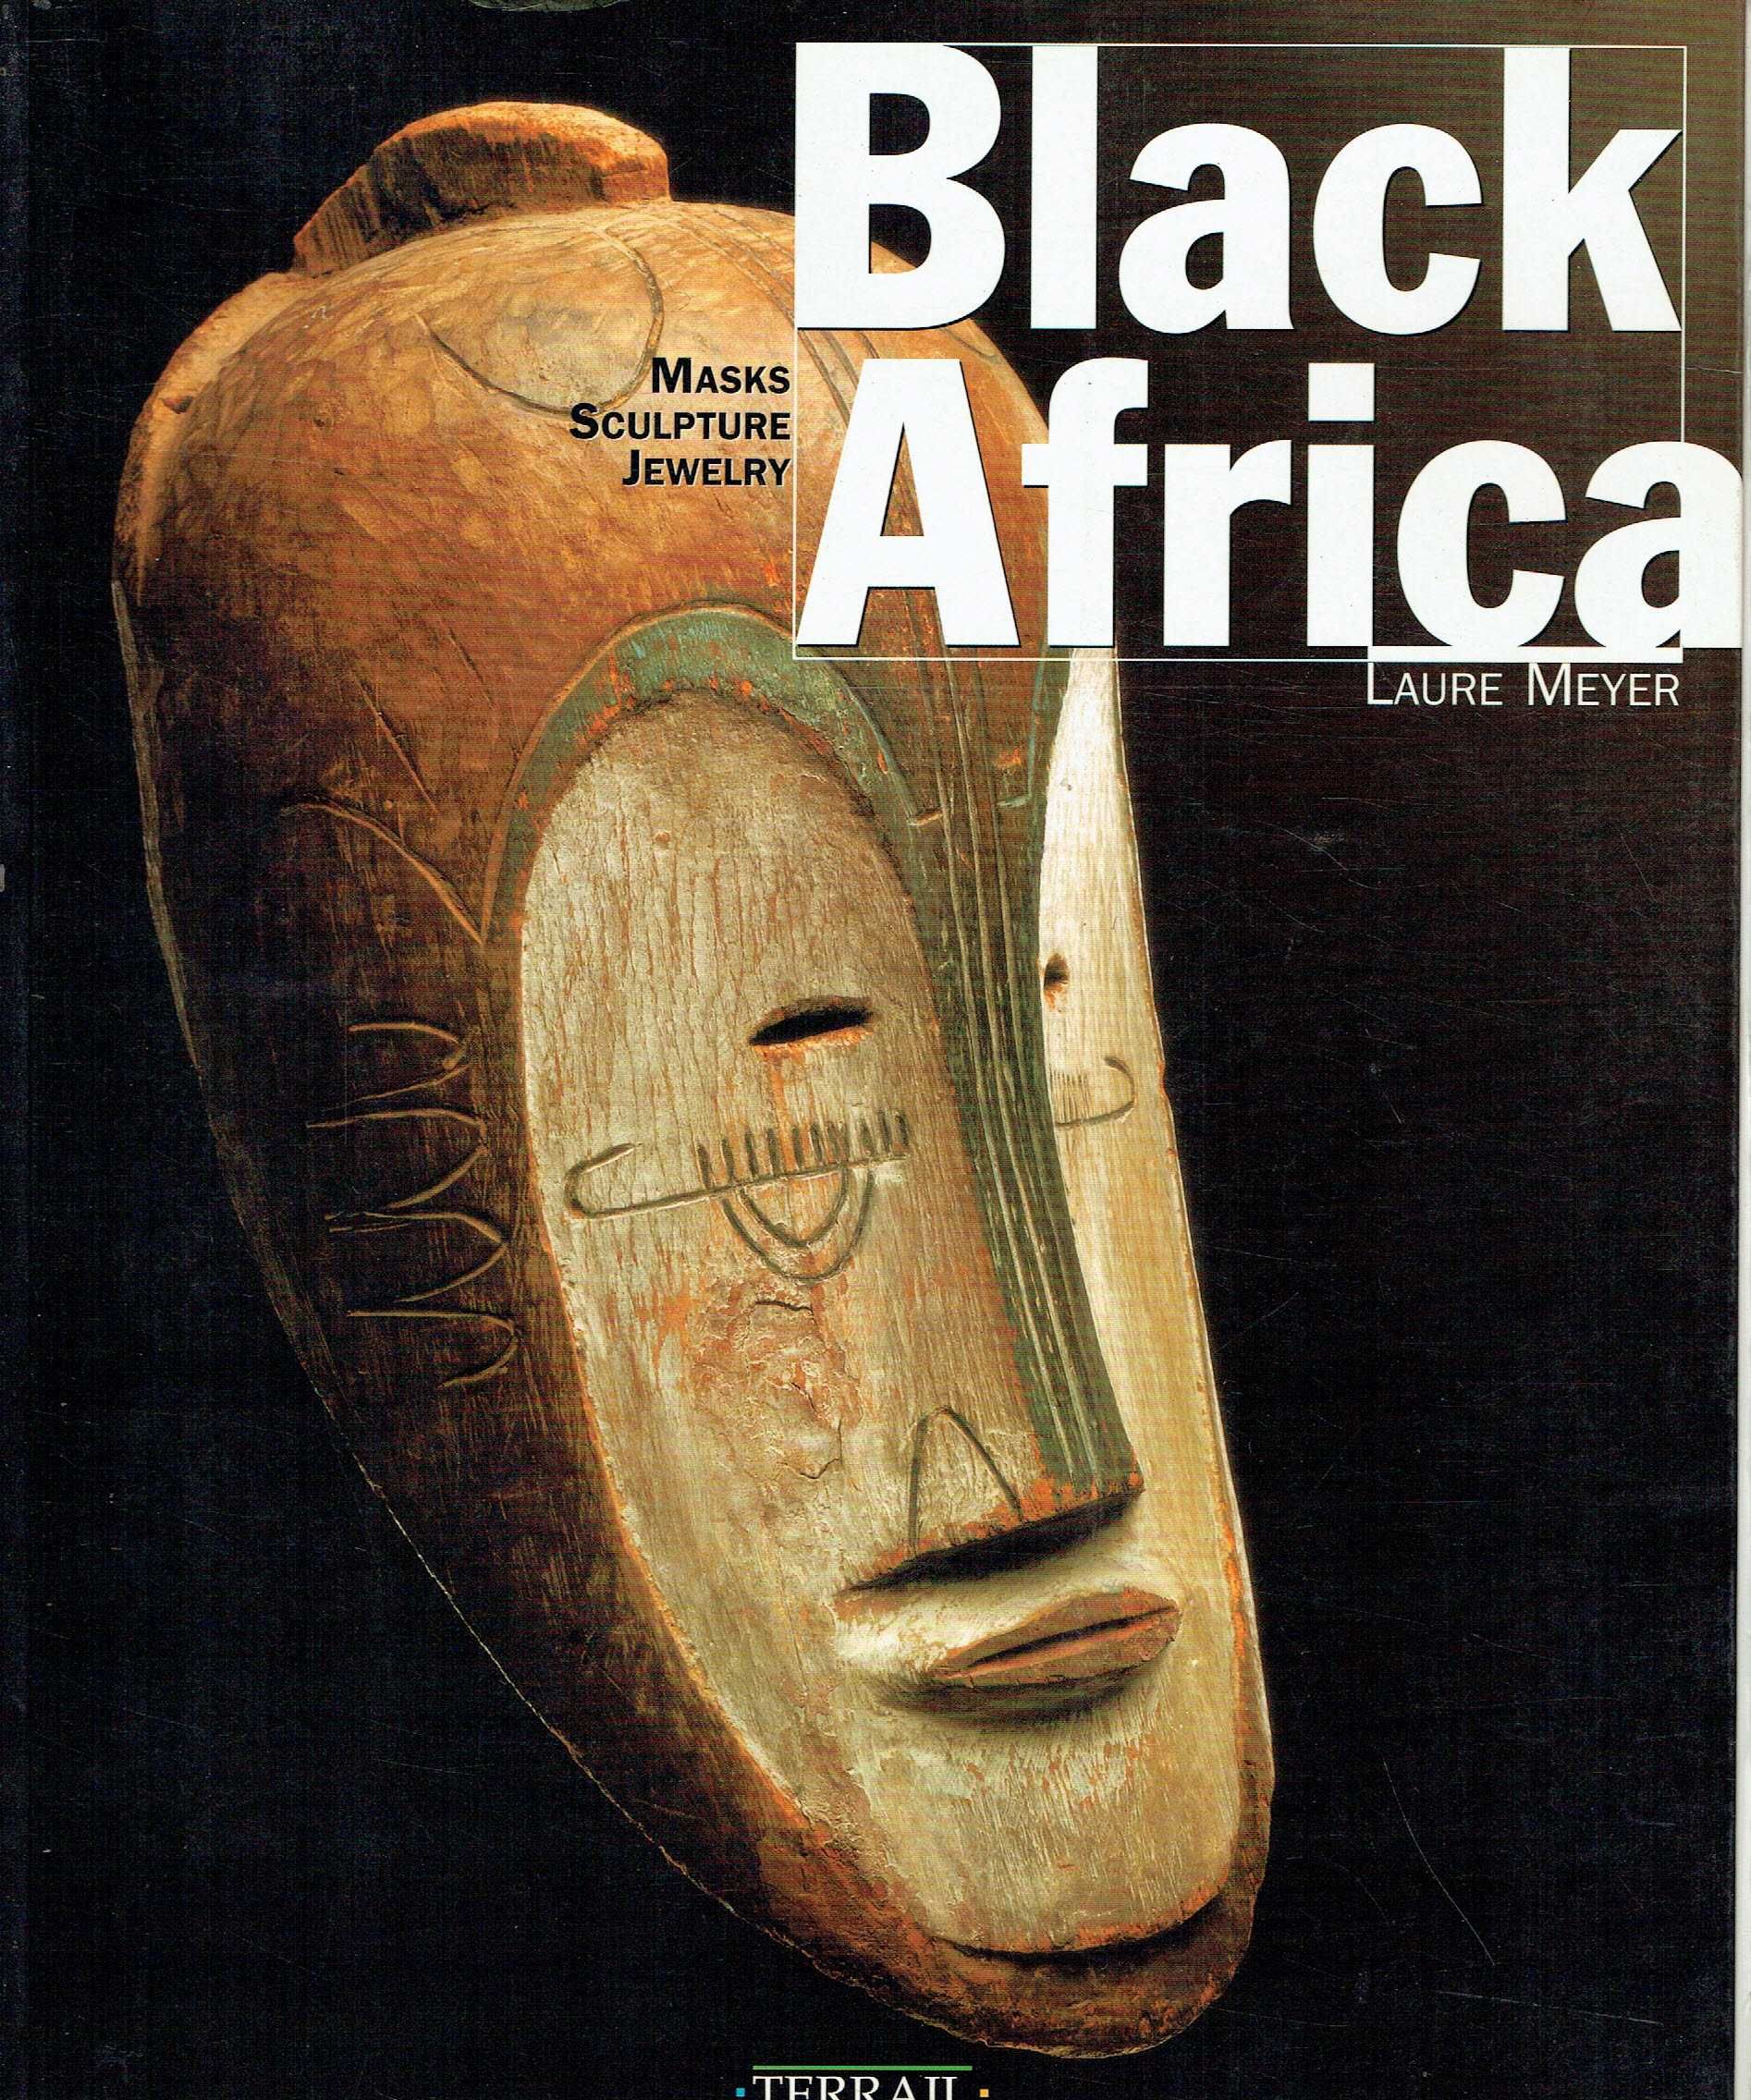 13491

Black Africa: Masks Sculpture Jewelry
de Laure Meyer